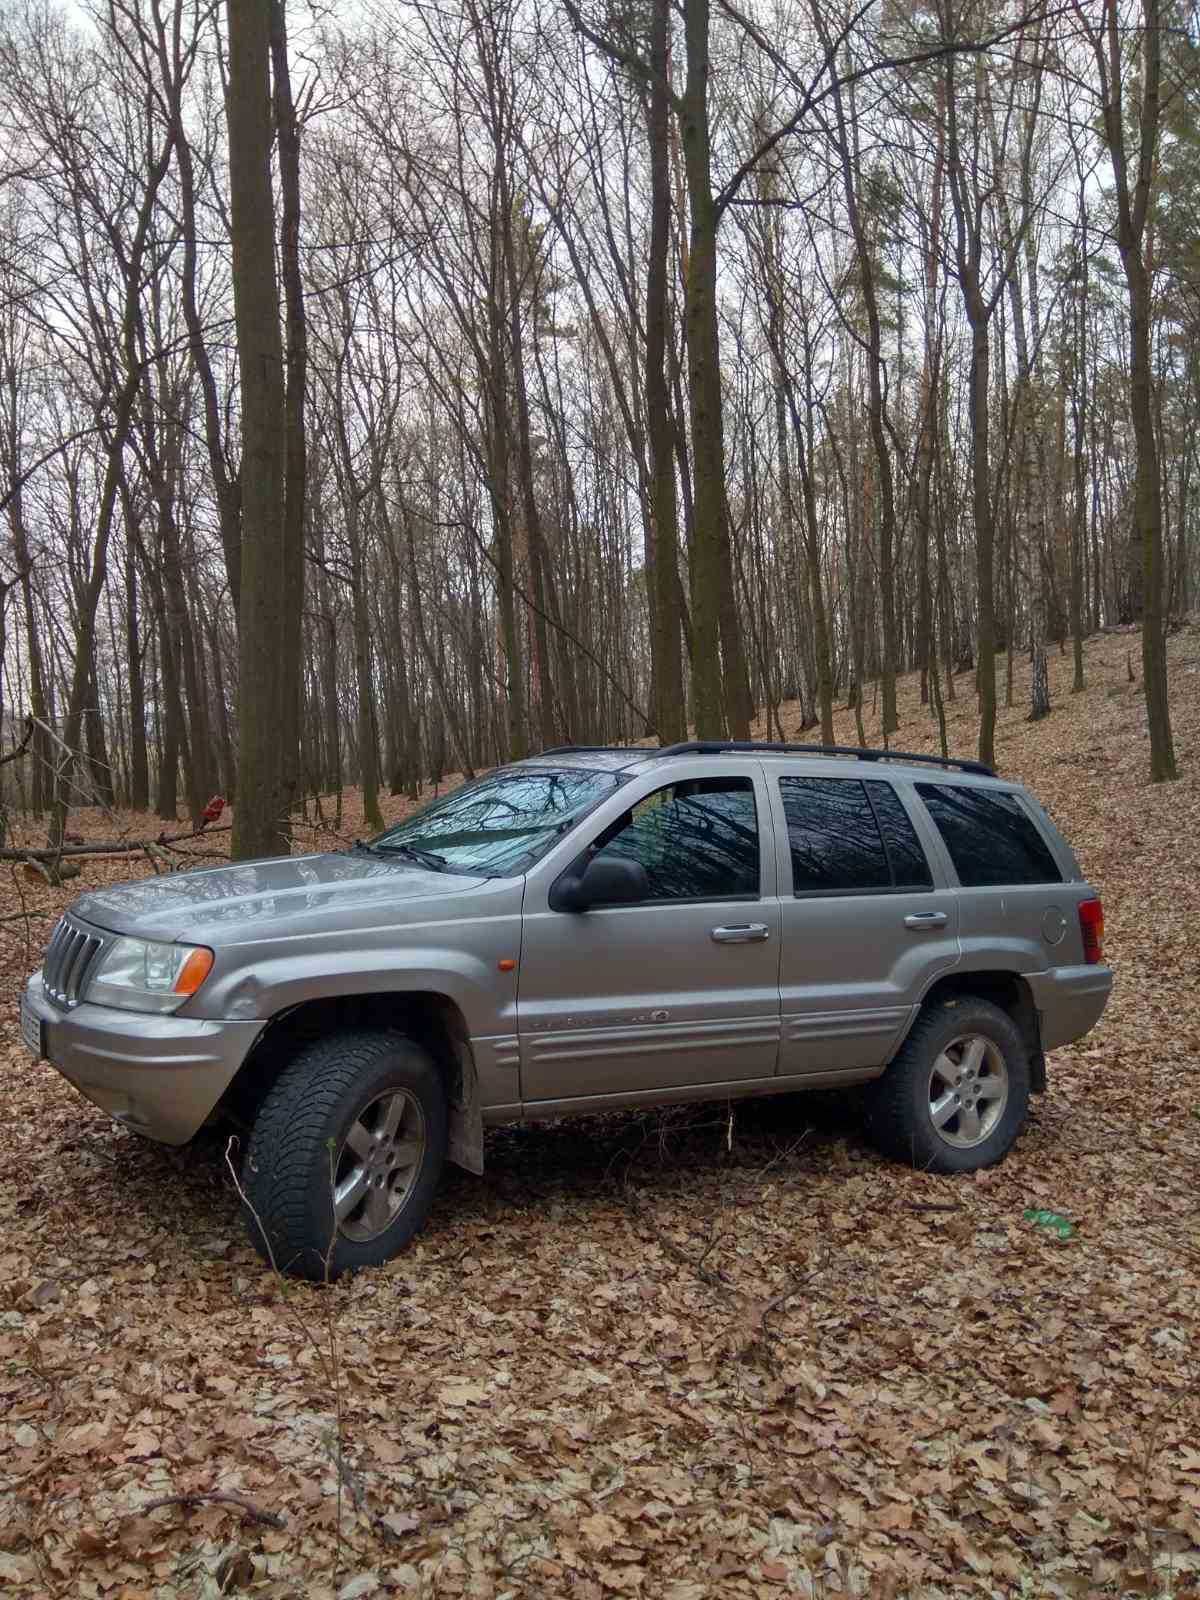 Продам Jeep Grand Cherokee WJ 2002 4.7 HO Overland. Газ/бензин. Торг.